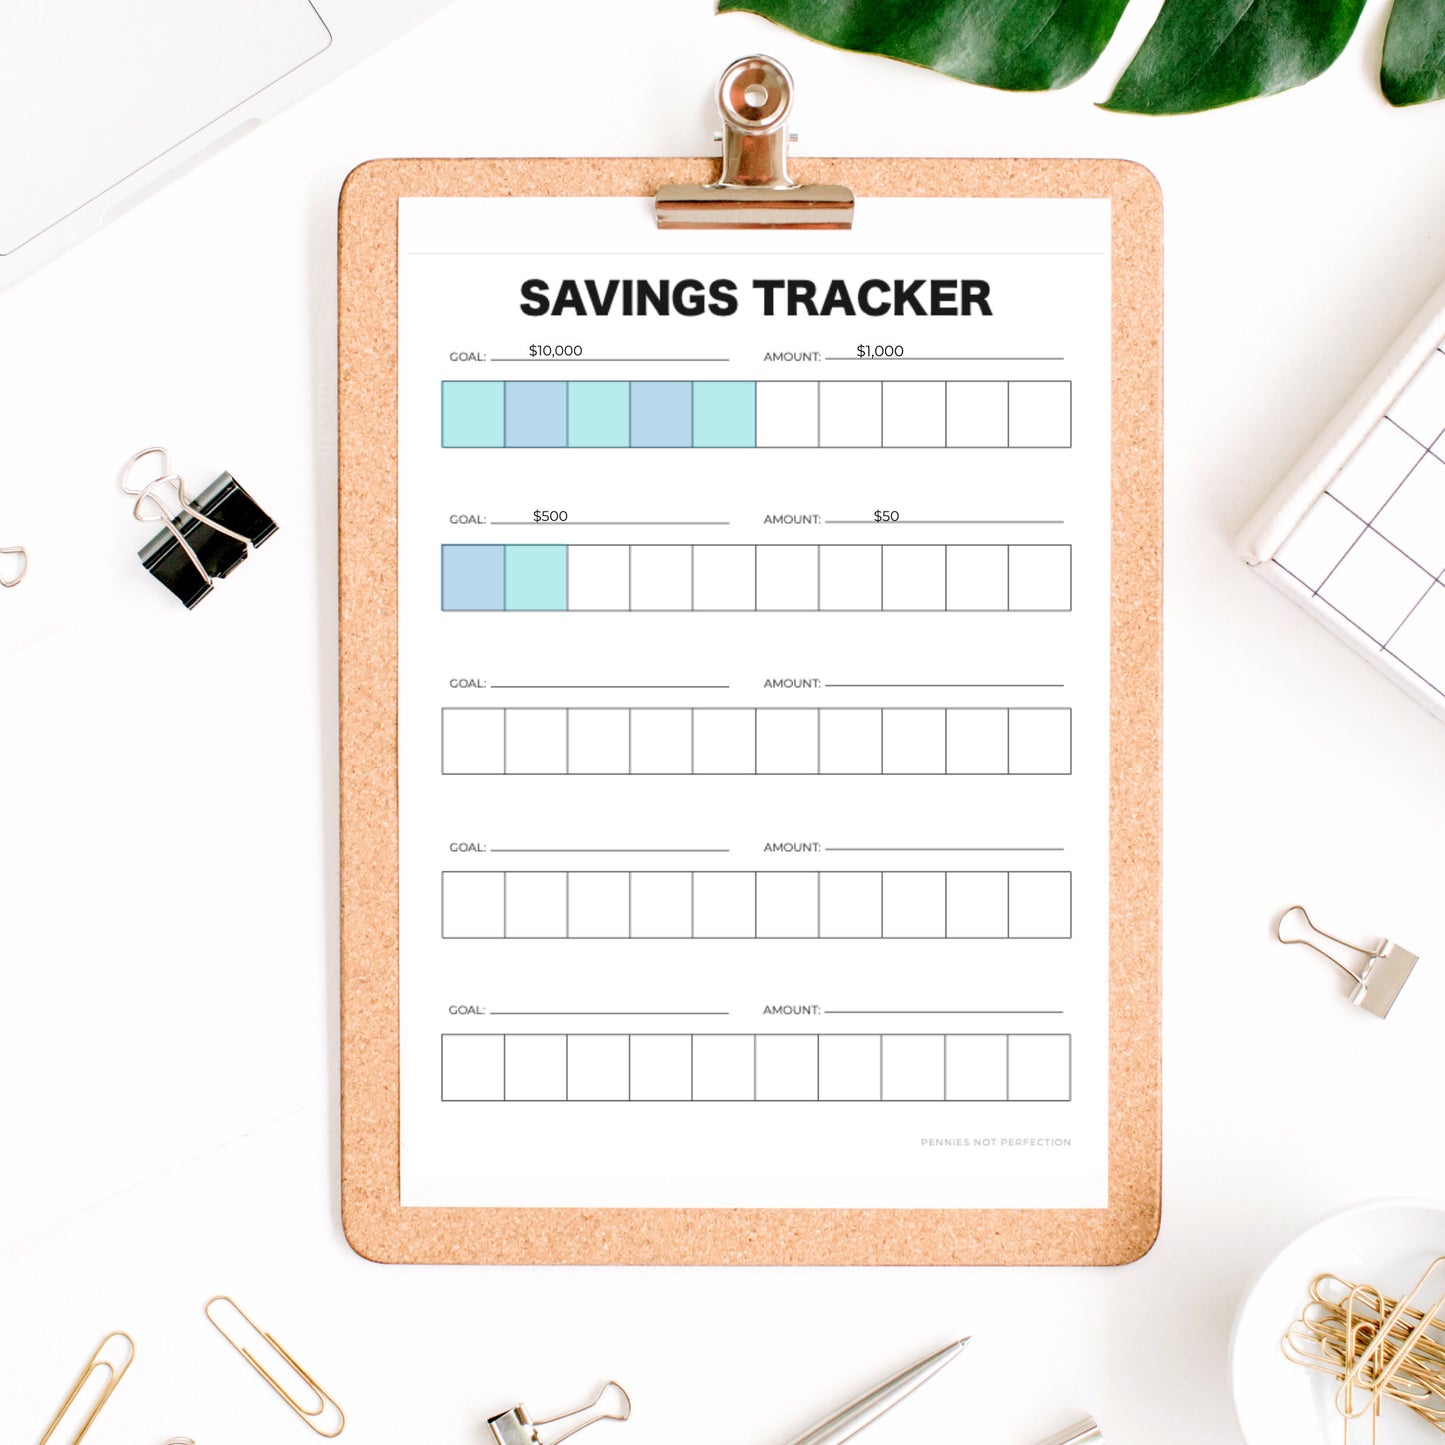 Savings Progress Tracker | Savings Tracker Printable PDF 1